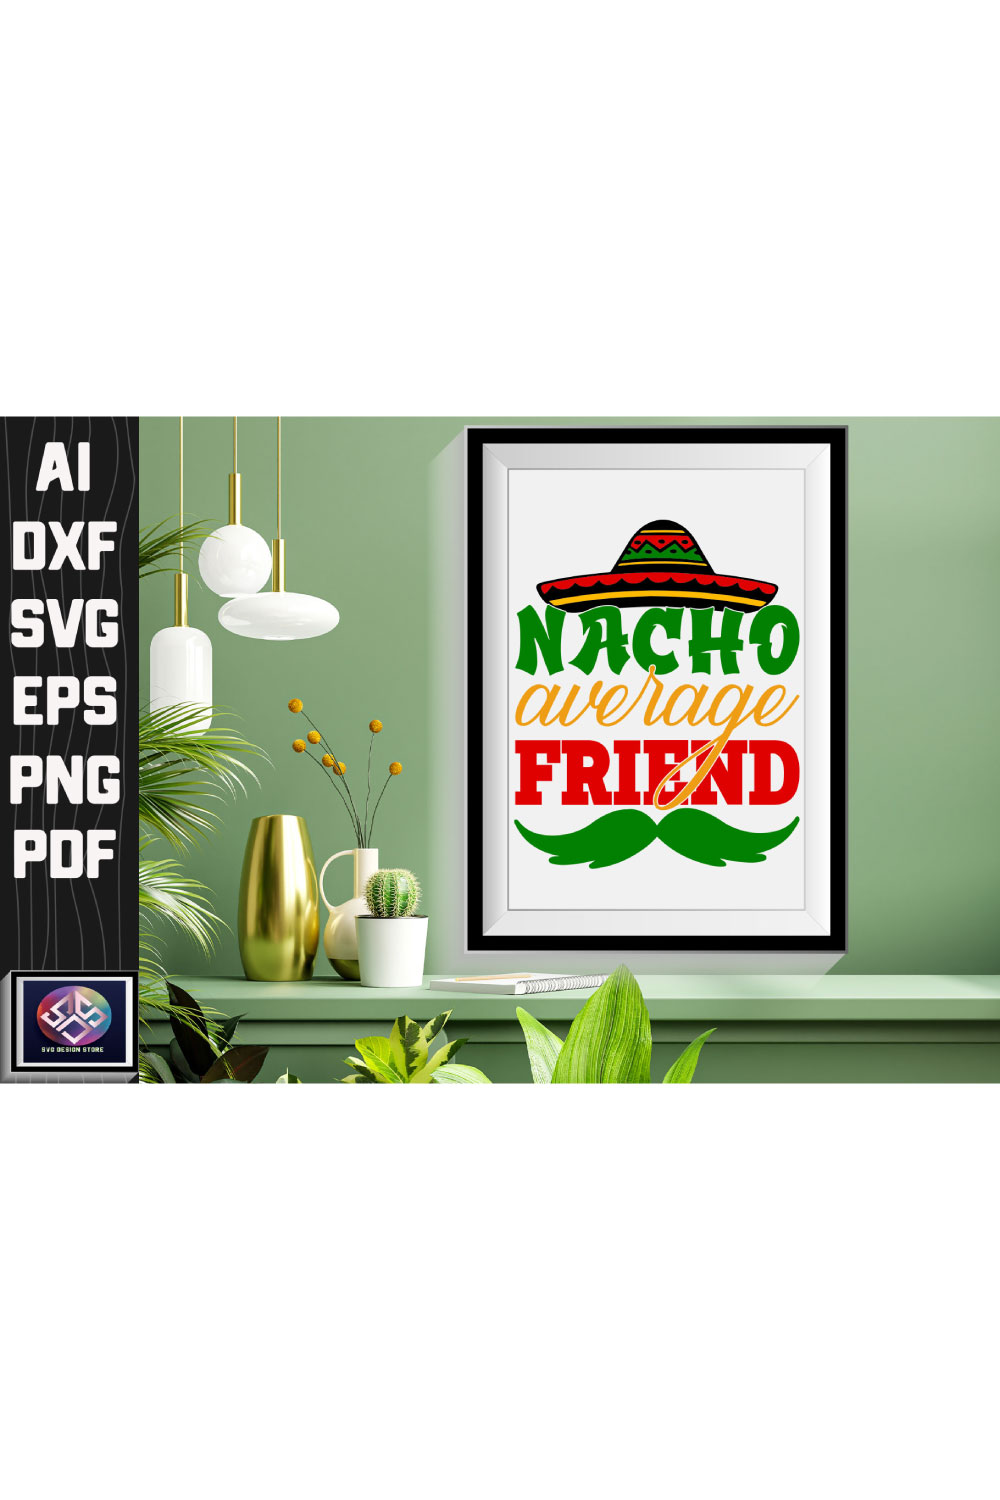 Nacho Average Friend pinterest preview image.